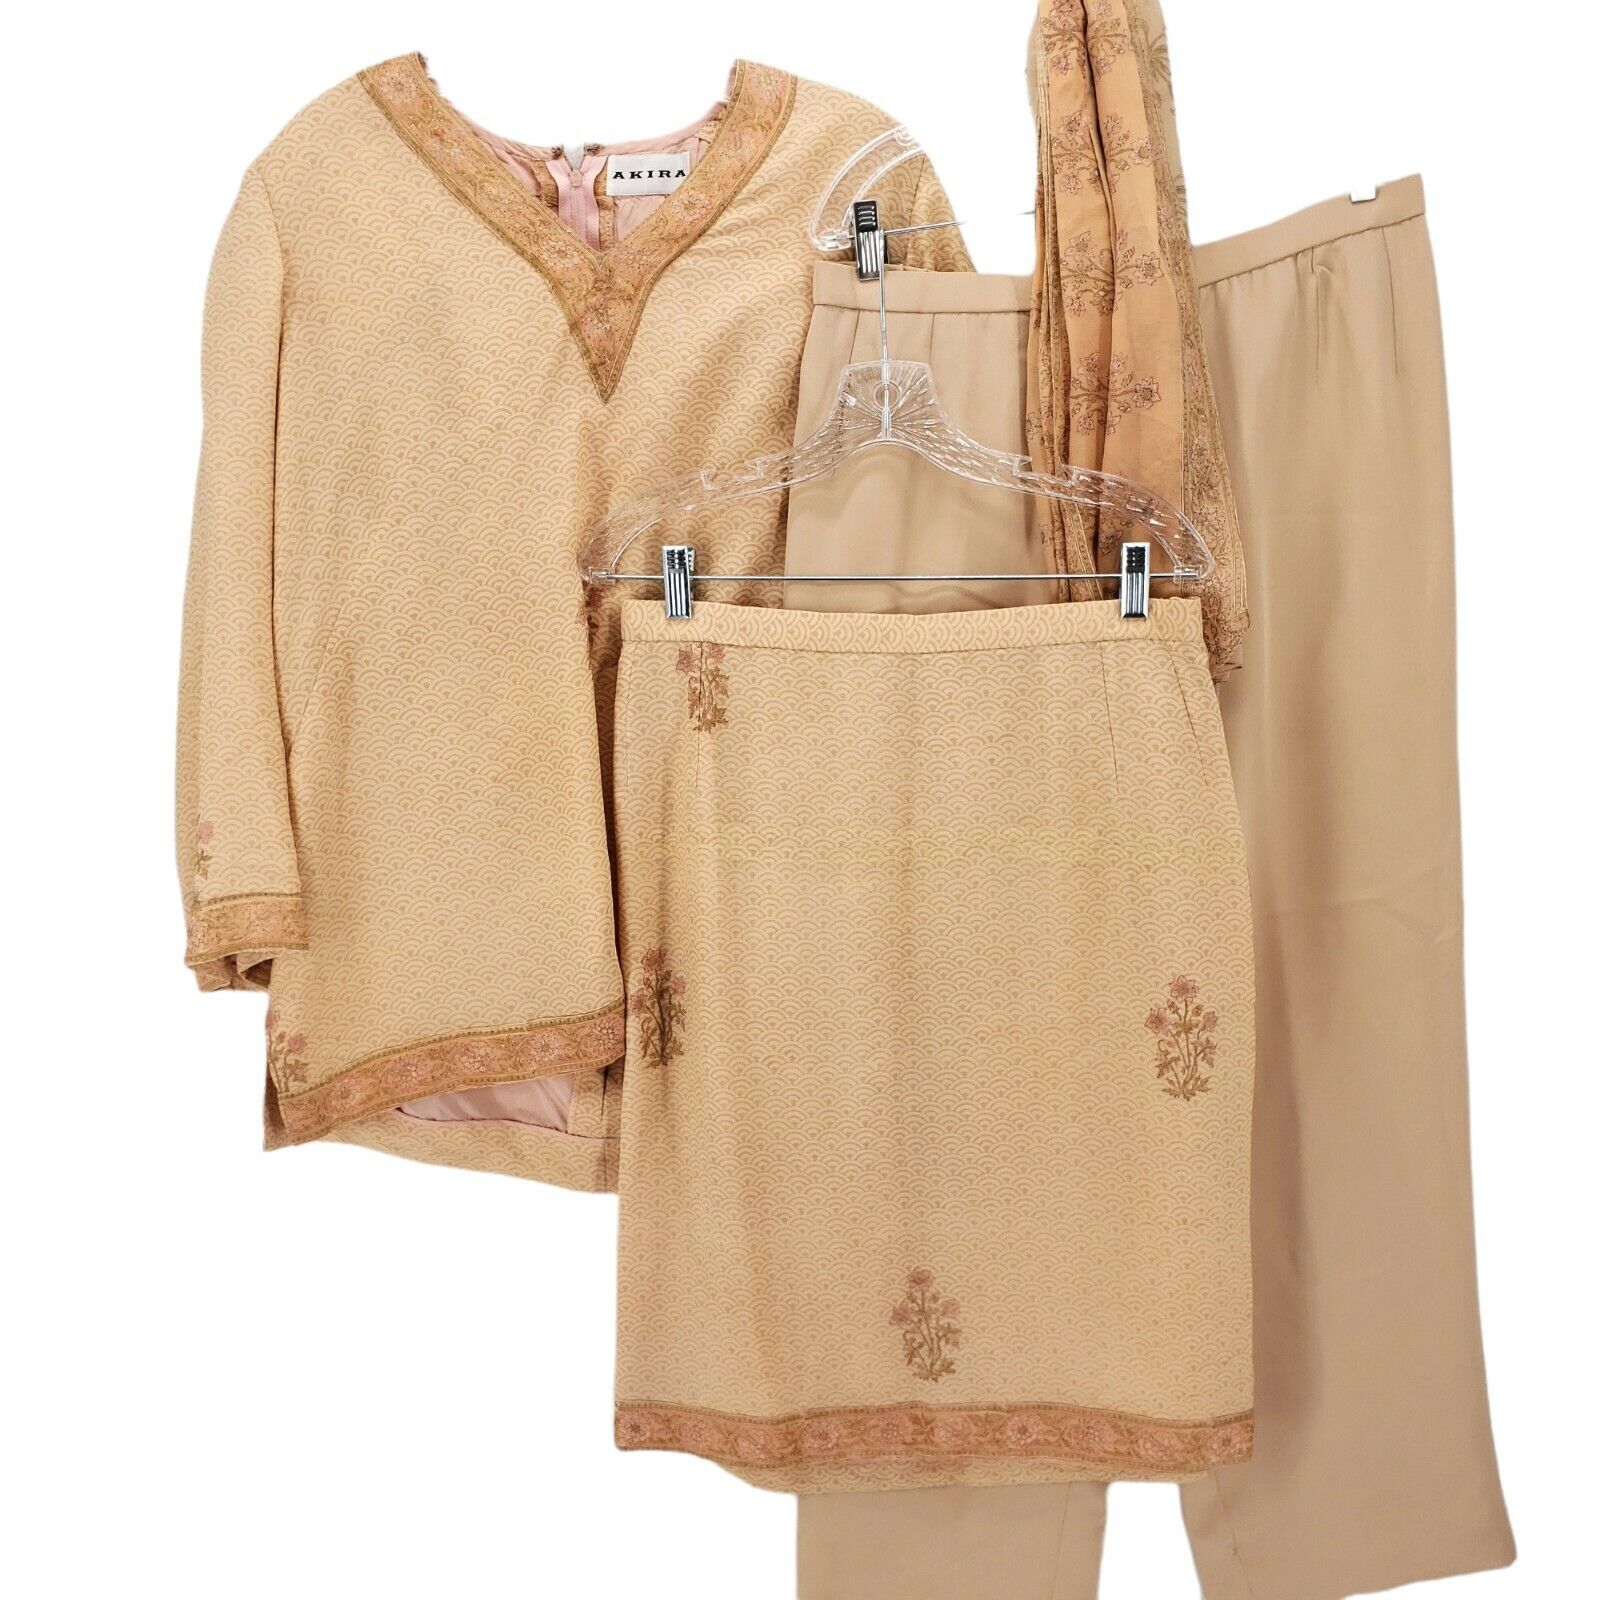 Vintage AKIRA 4-Piece Set Skirt Pants Blouse Scarf Geometric Floral Size LARGE?